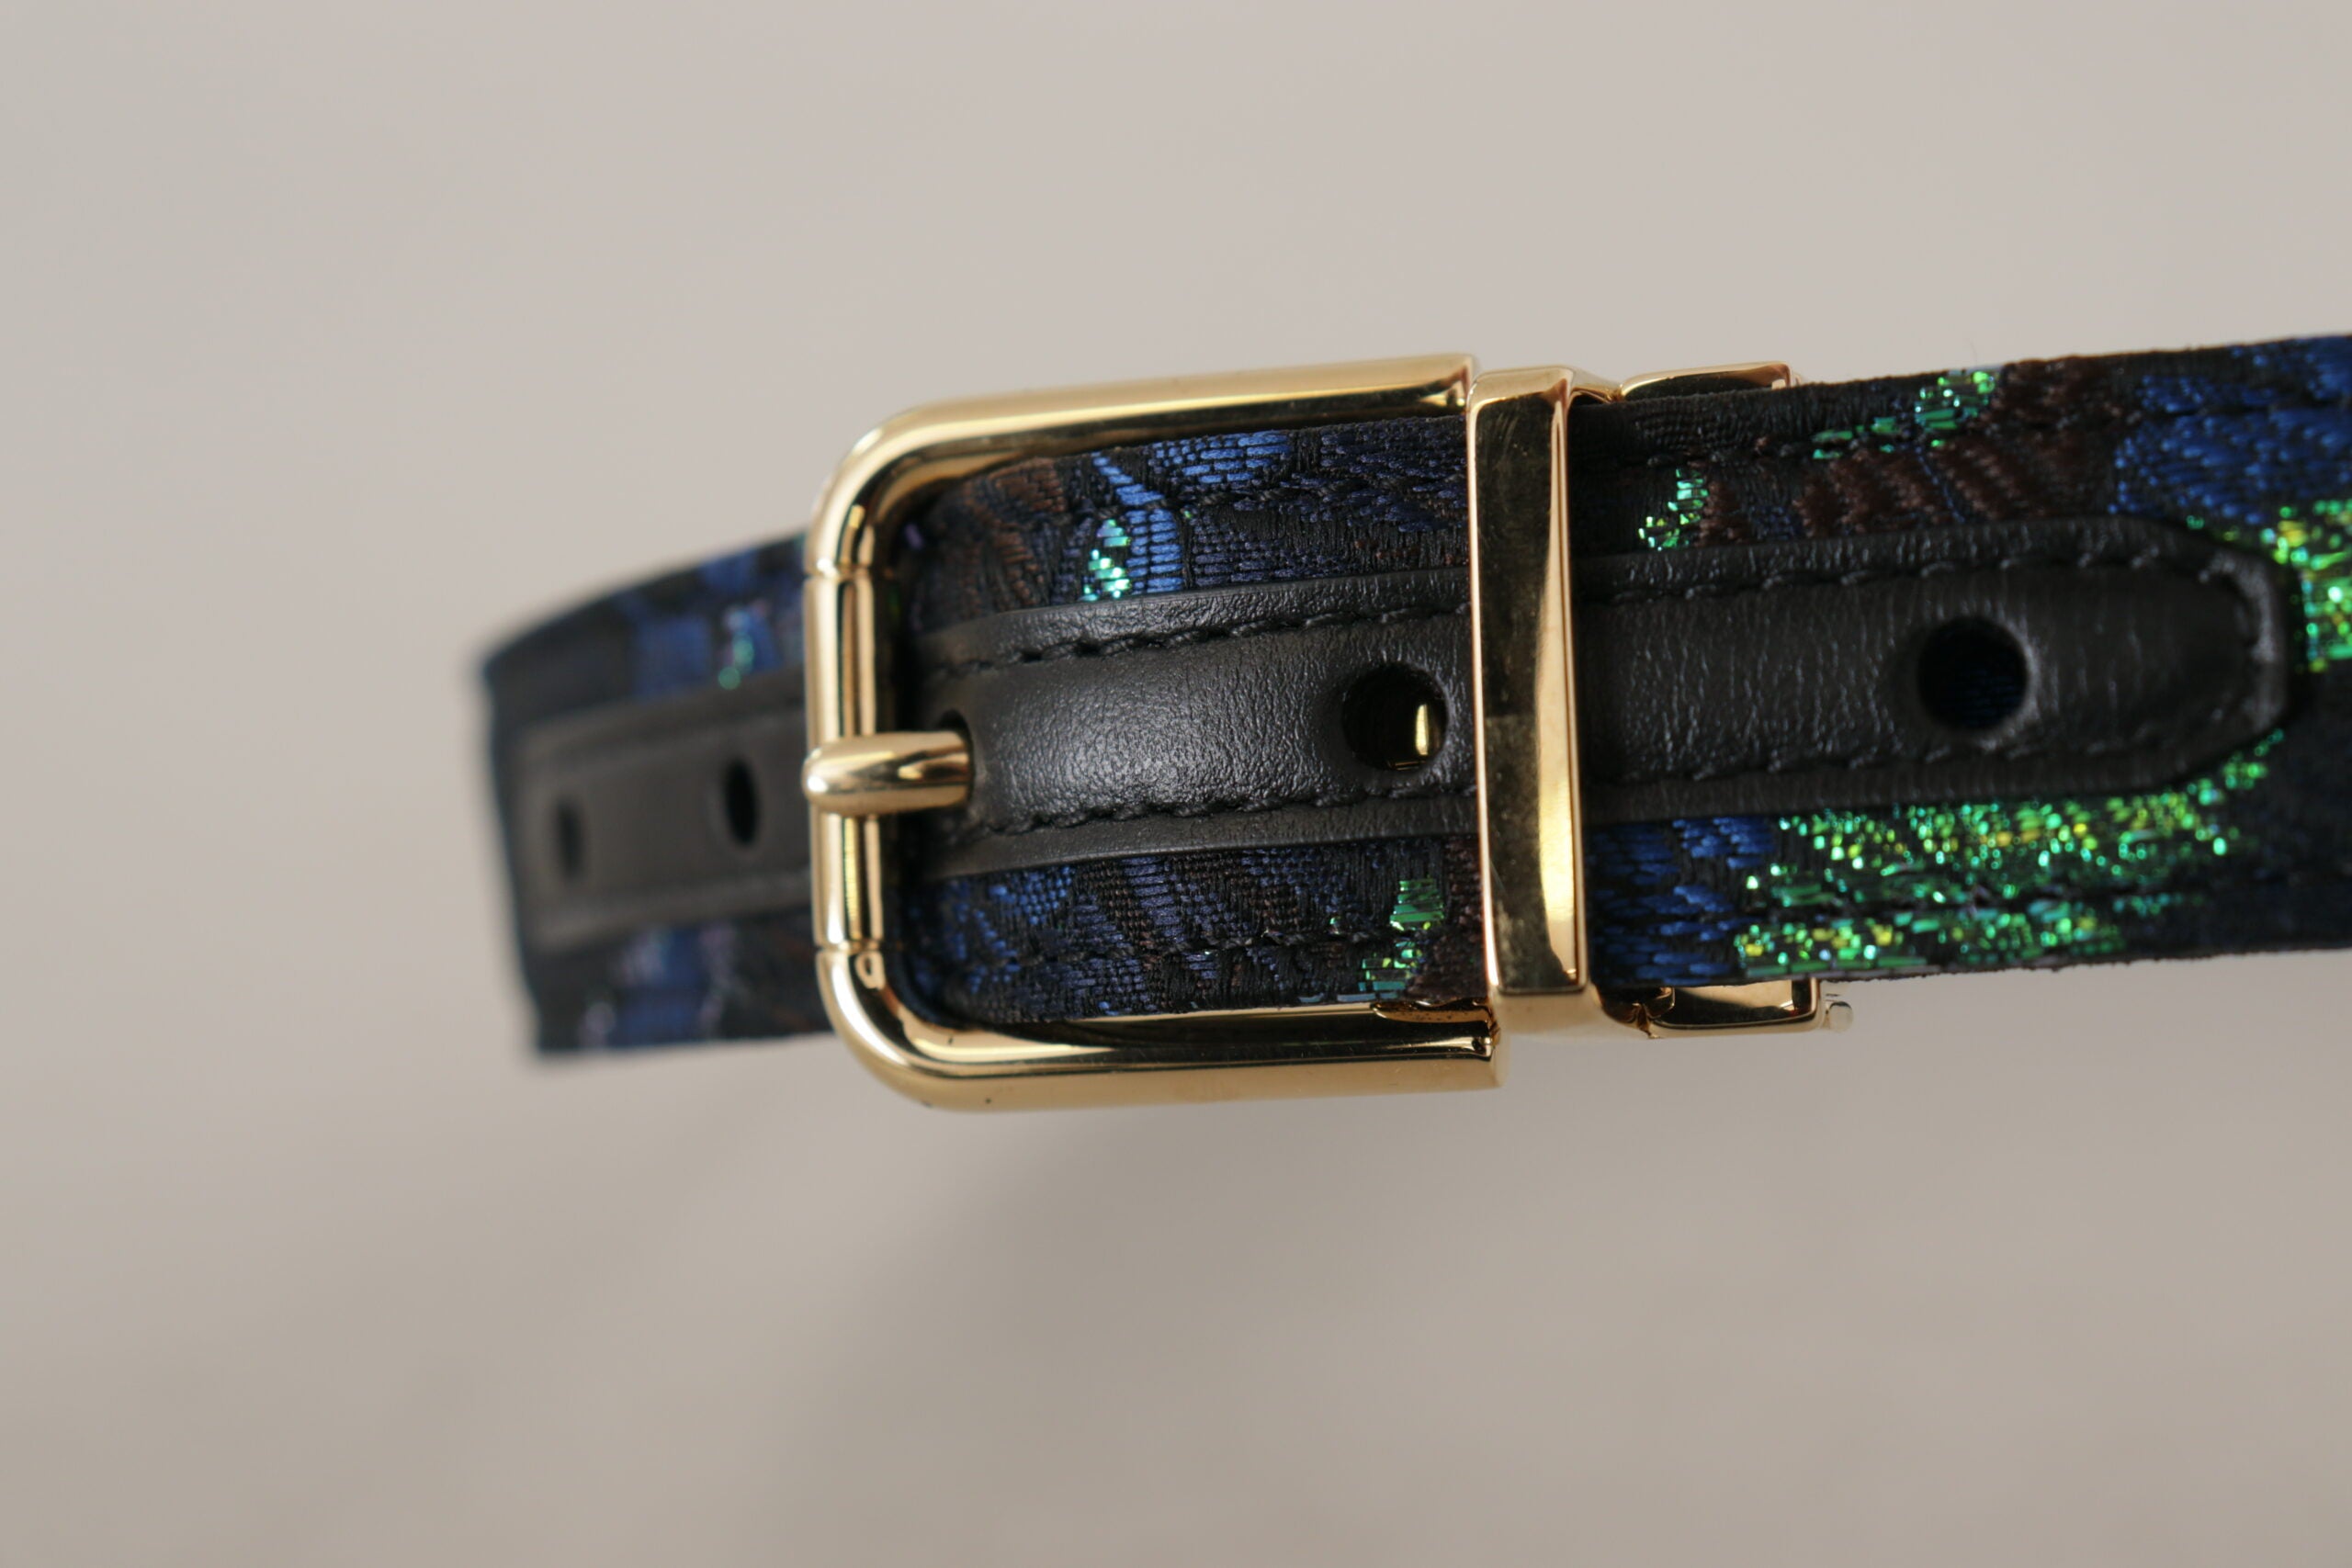 Dolce & Gabbana Elegant Multicolor Leather Belt with Gold Buckle